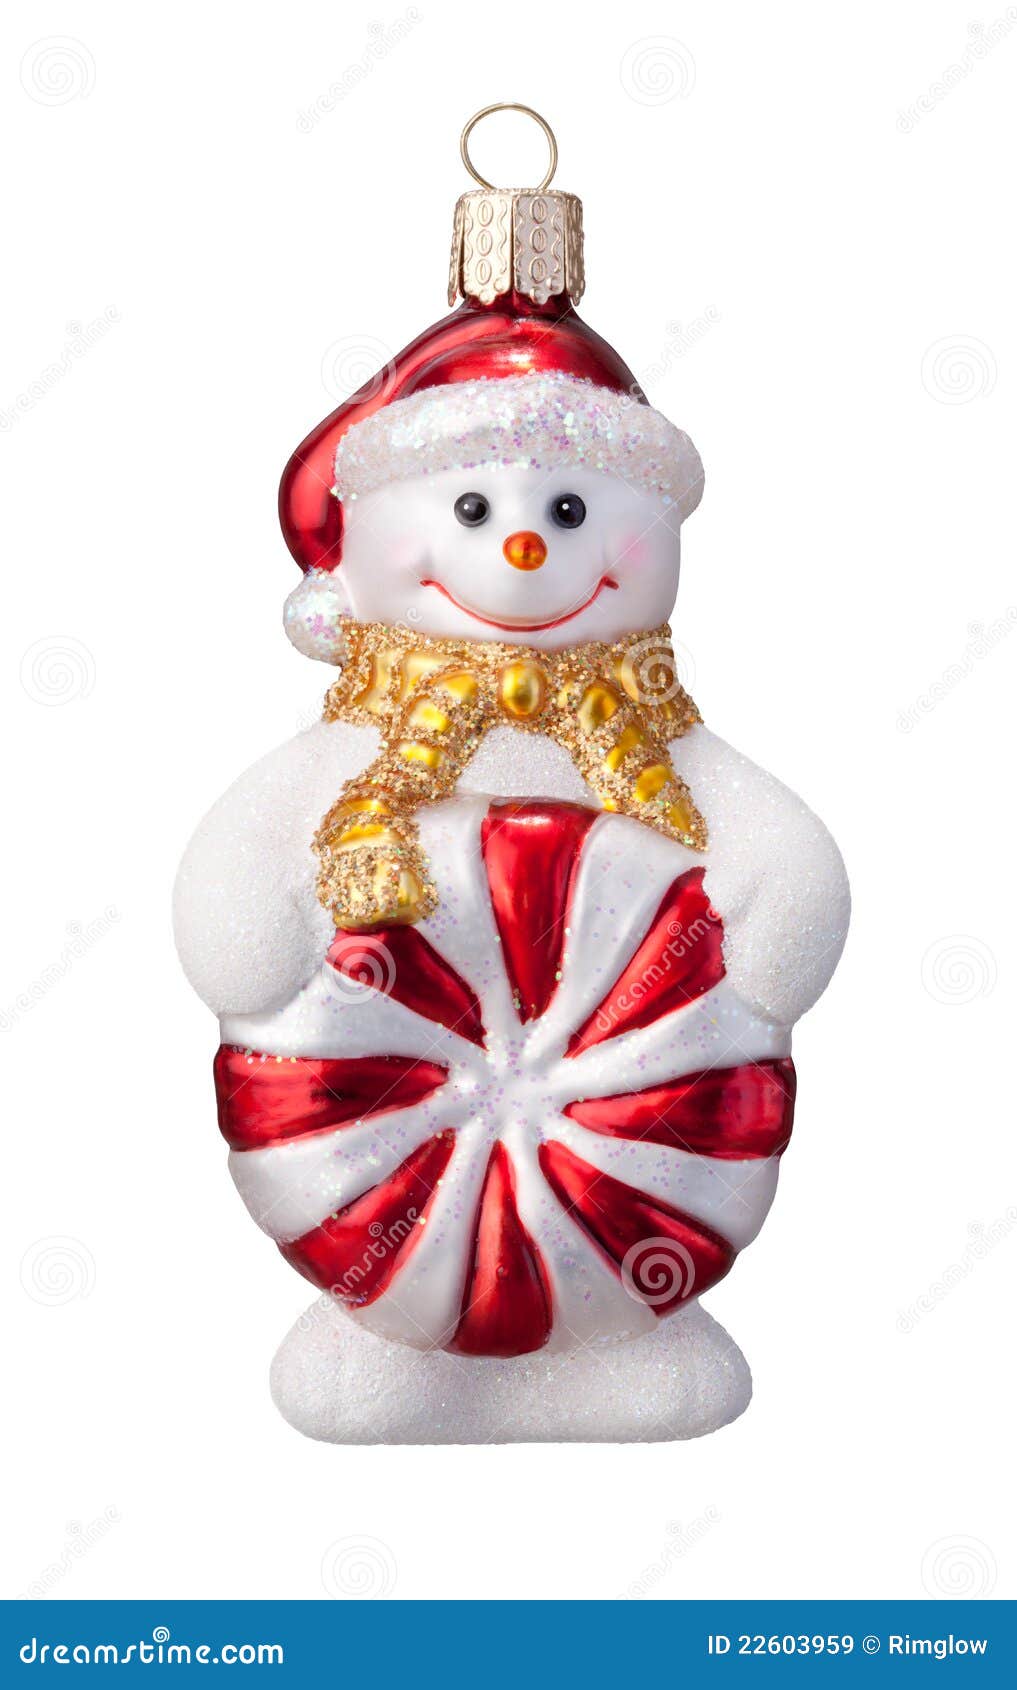 https://thumbs.dreamstime.com/z/snowman-ornament-22603959.jpg